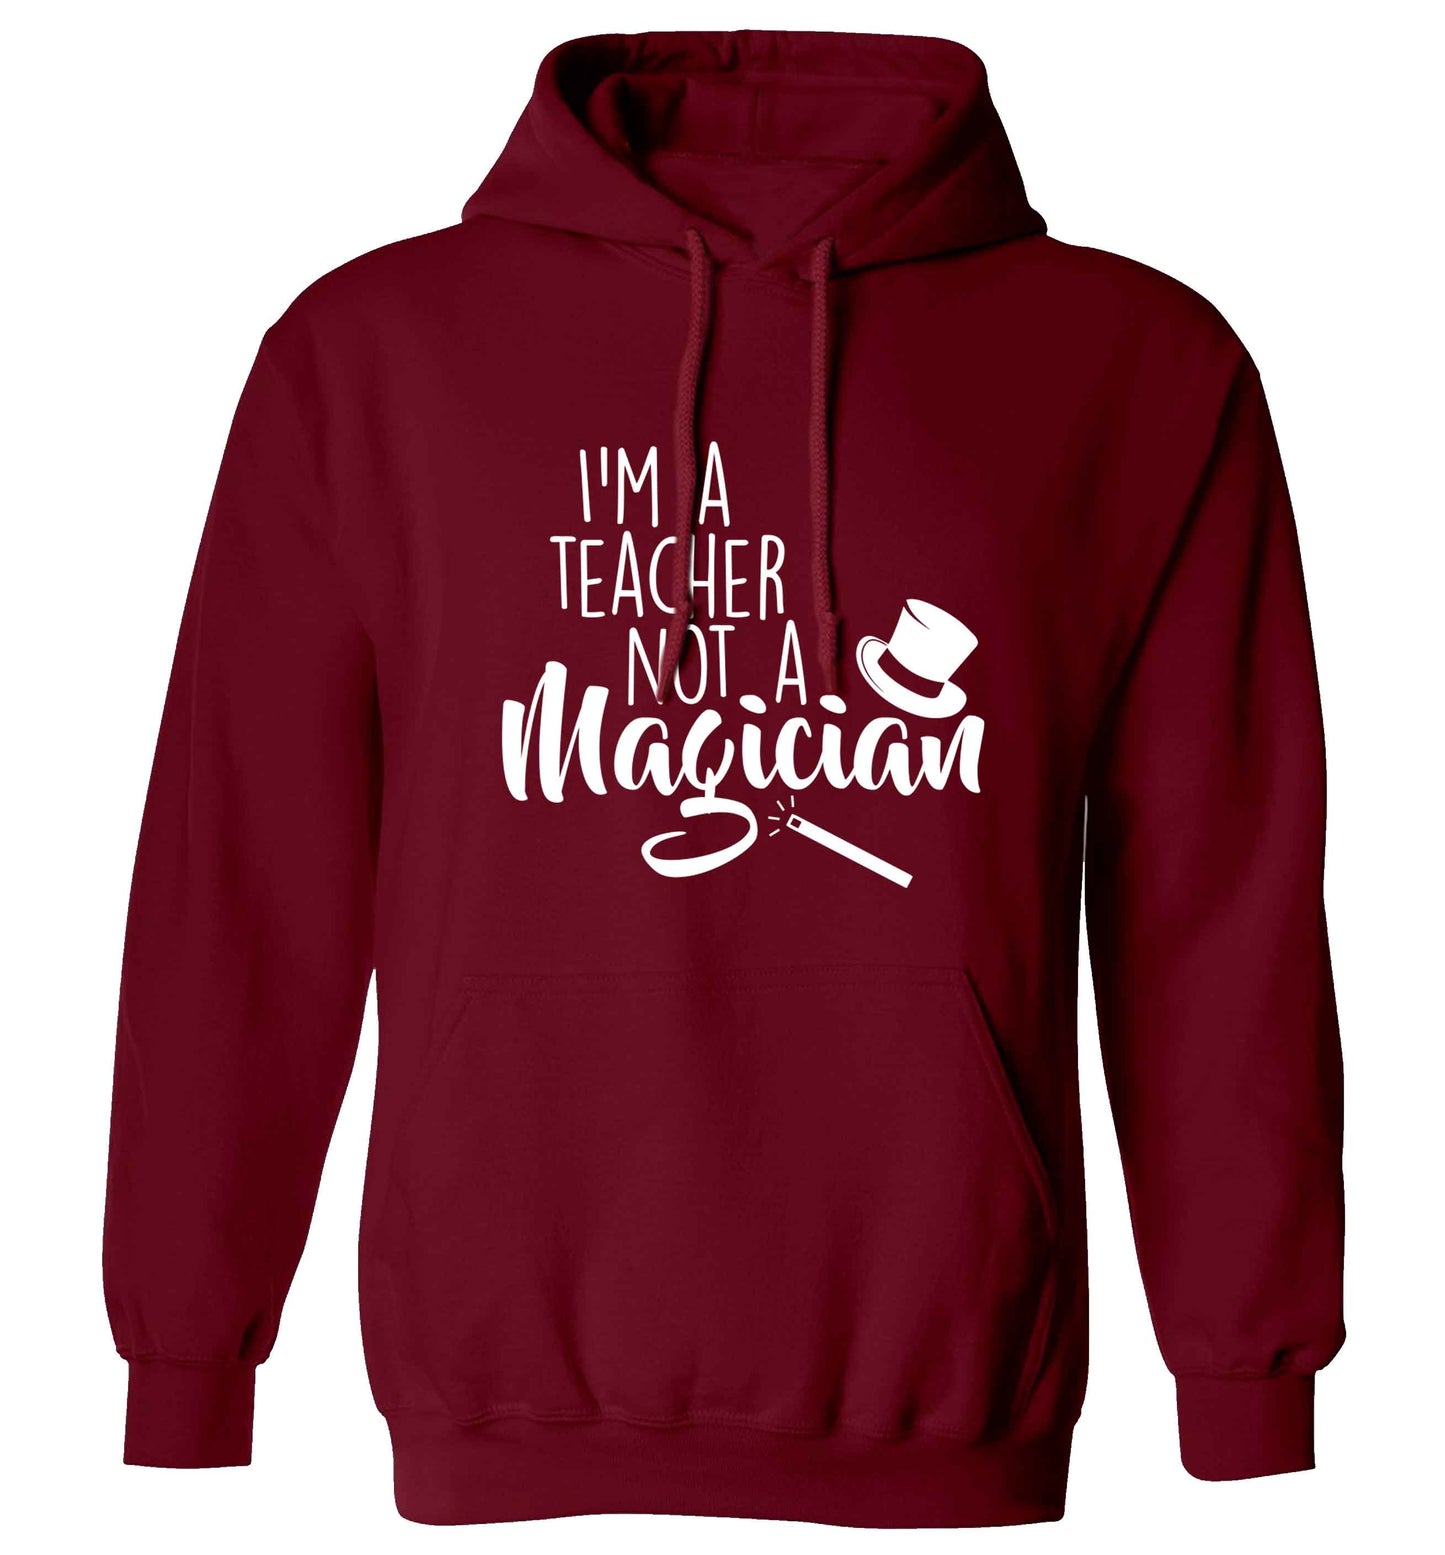 I'm a teacher not a magician adults unisex maroon hoodie 2XL